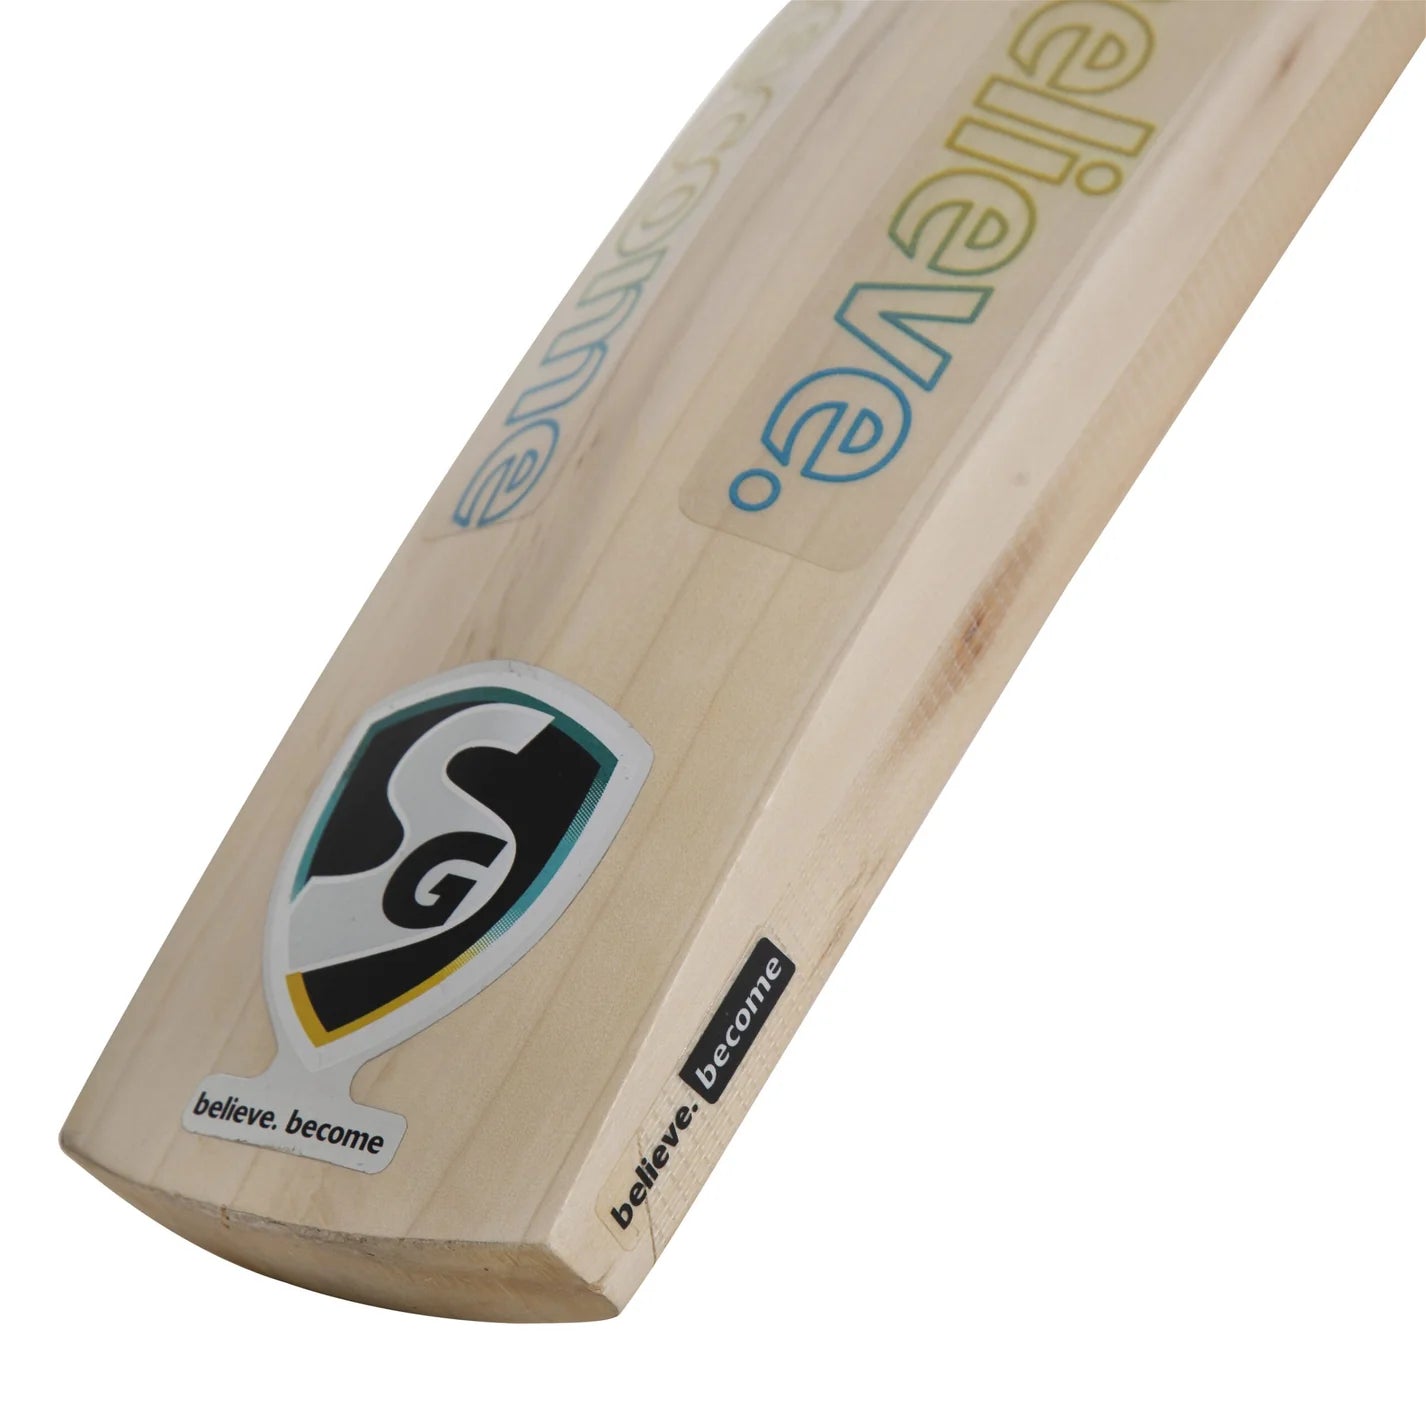 SG Hiscore Xtreme Traditionally Shaped English Willow grade 6 Cricket Bat